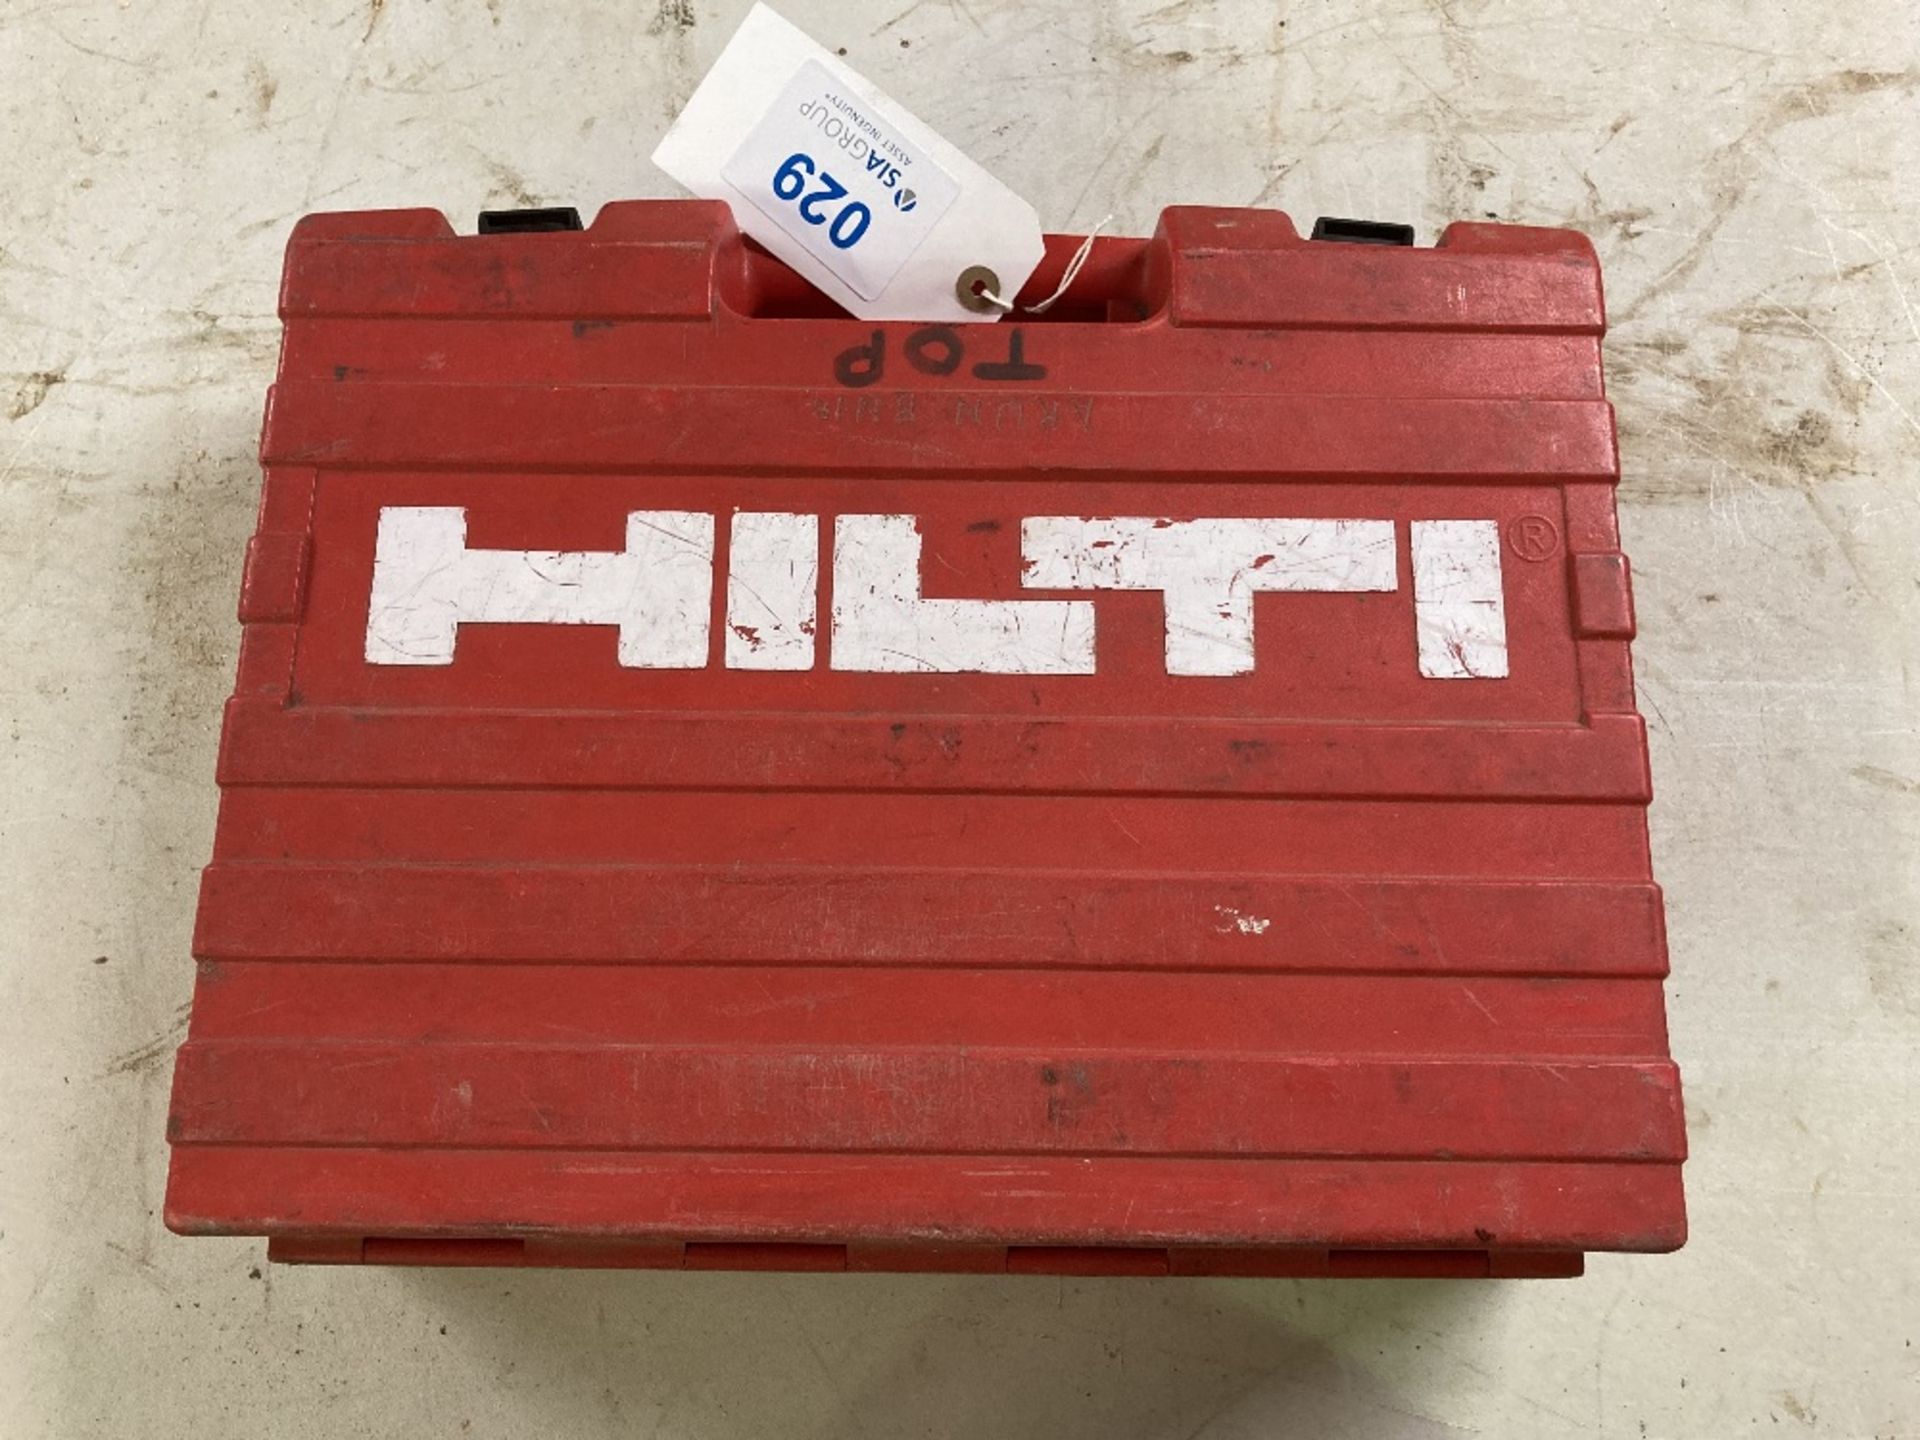 Hilti SR 16 Hammer Drill - Image 3 of 3